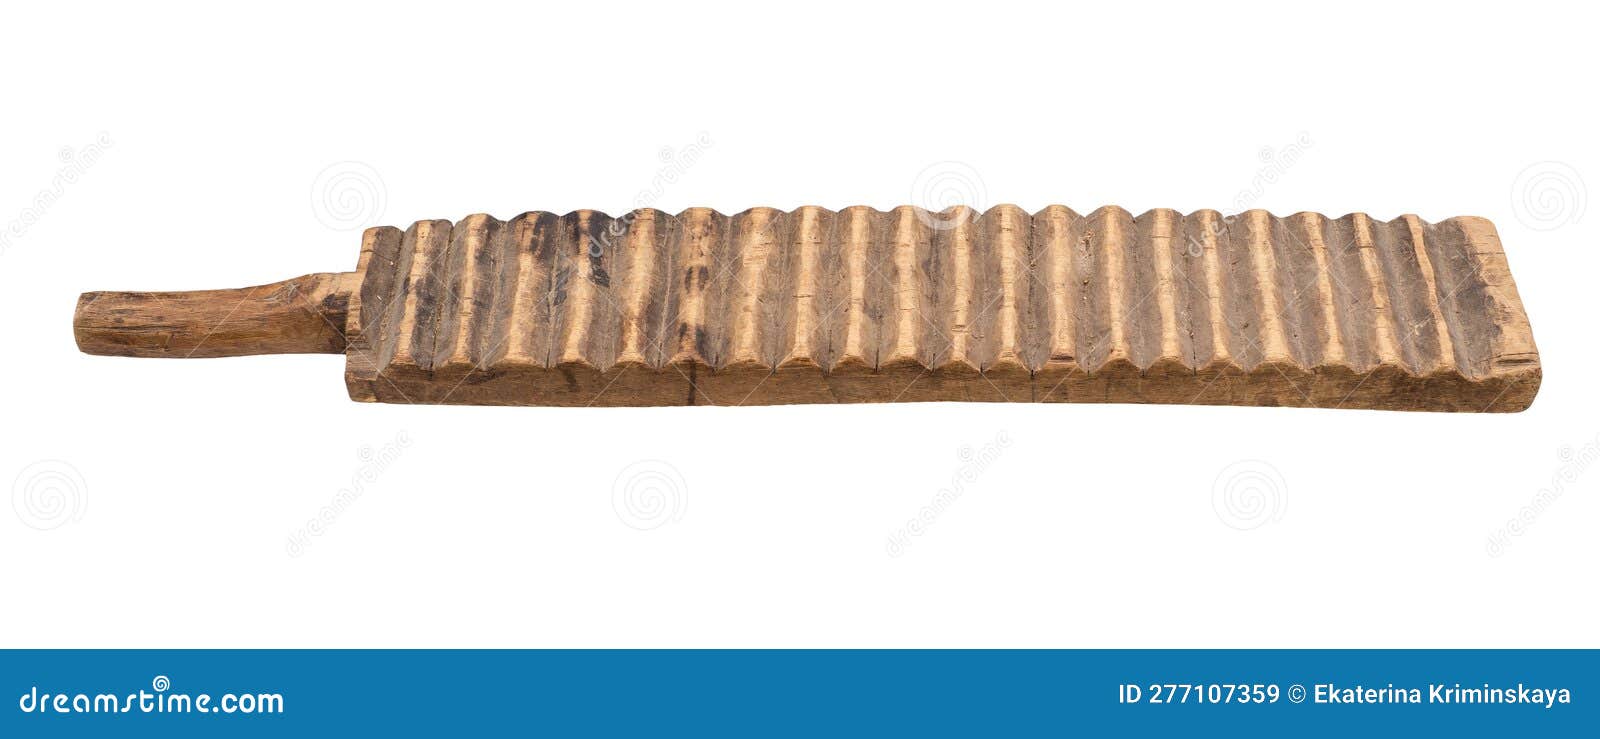 vintage rubel wooden board for rolling linen